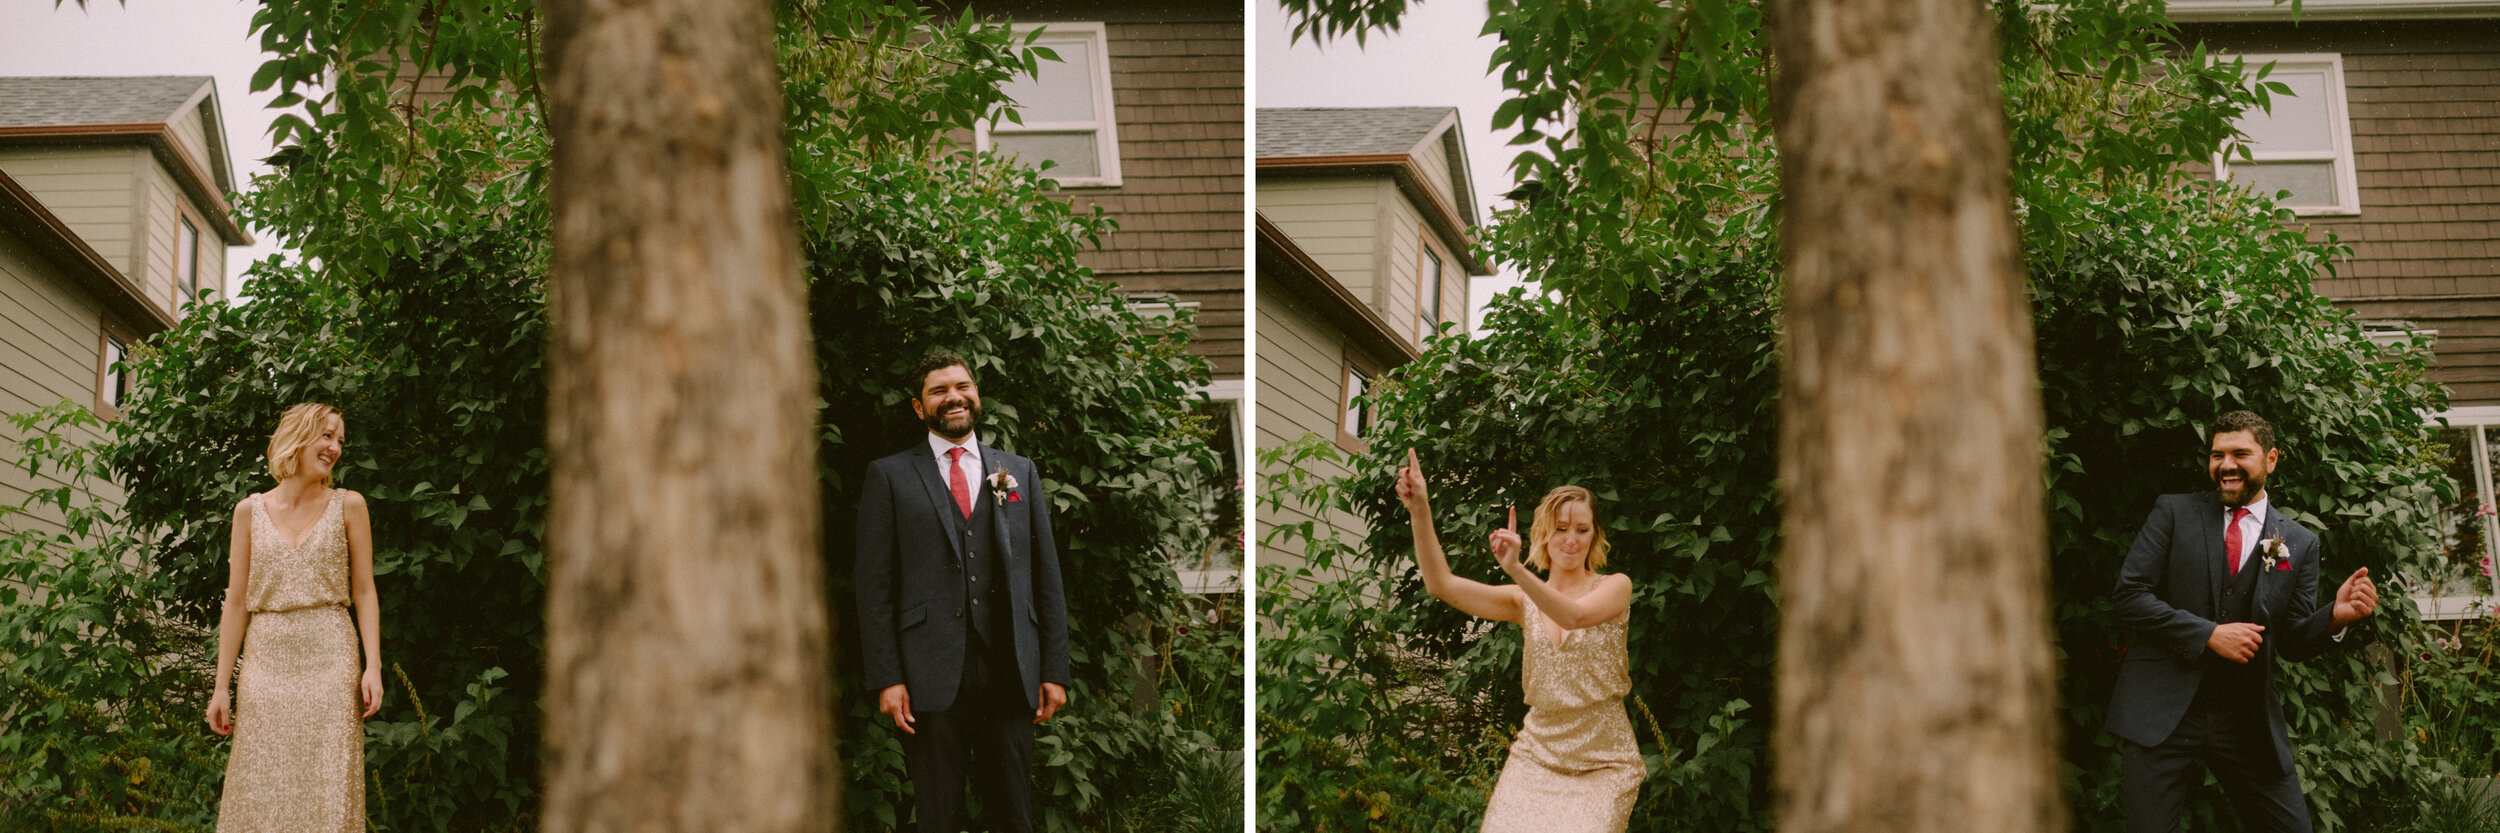 Best-Calgary-Wedding-Photographer-138.jpg